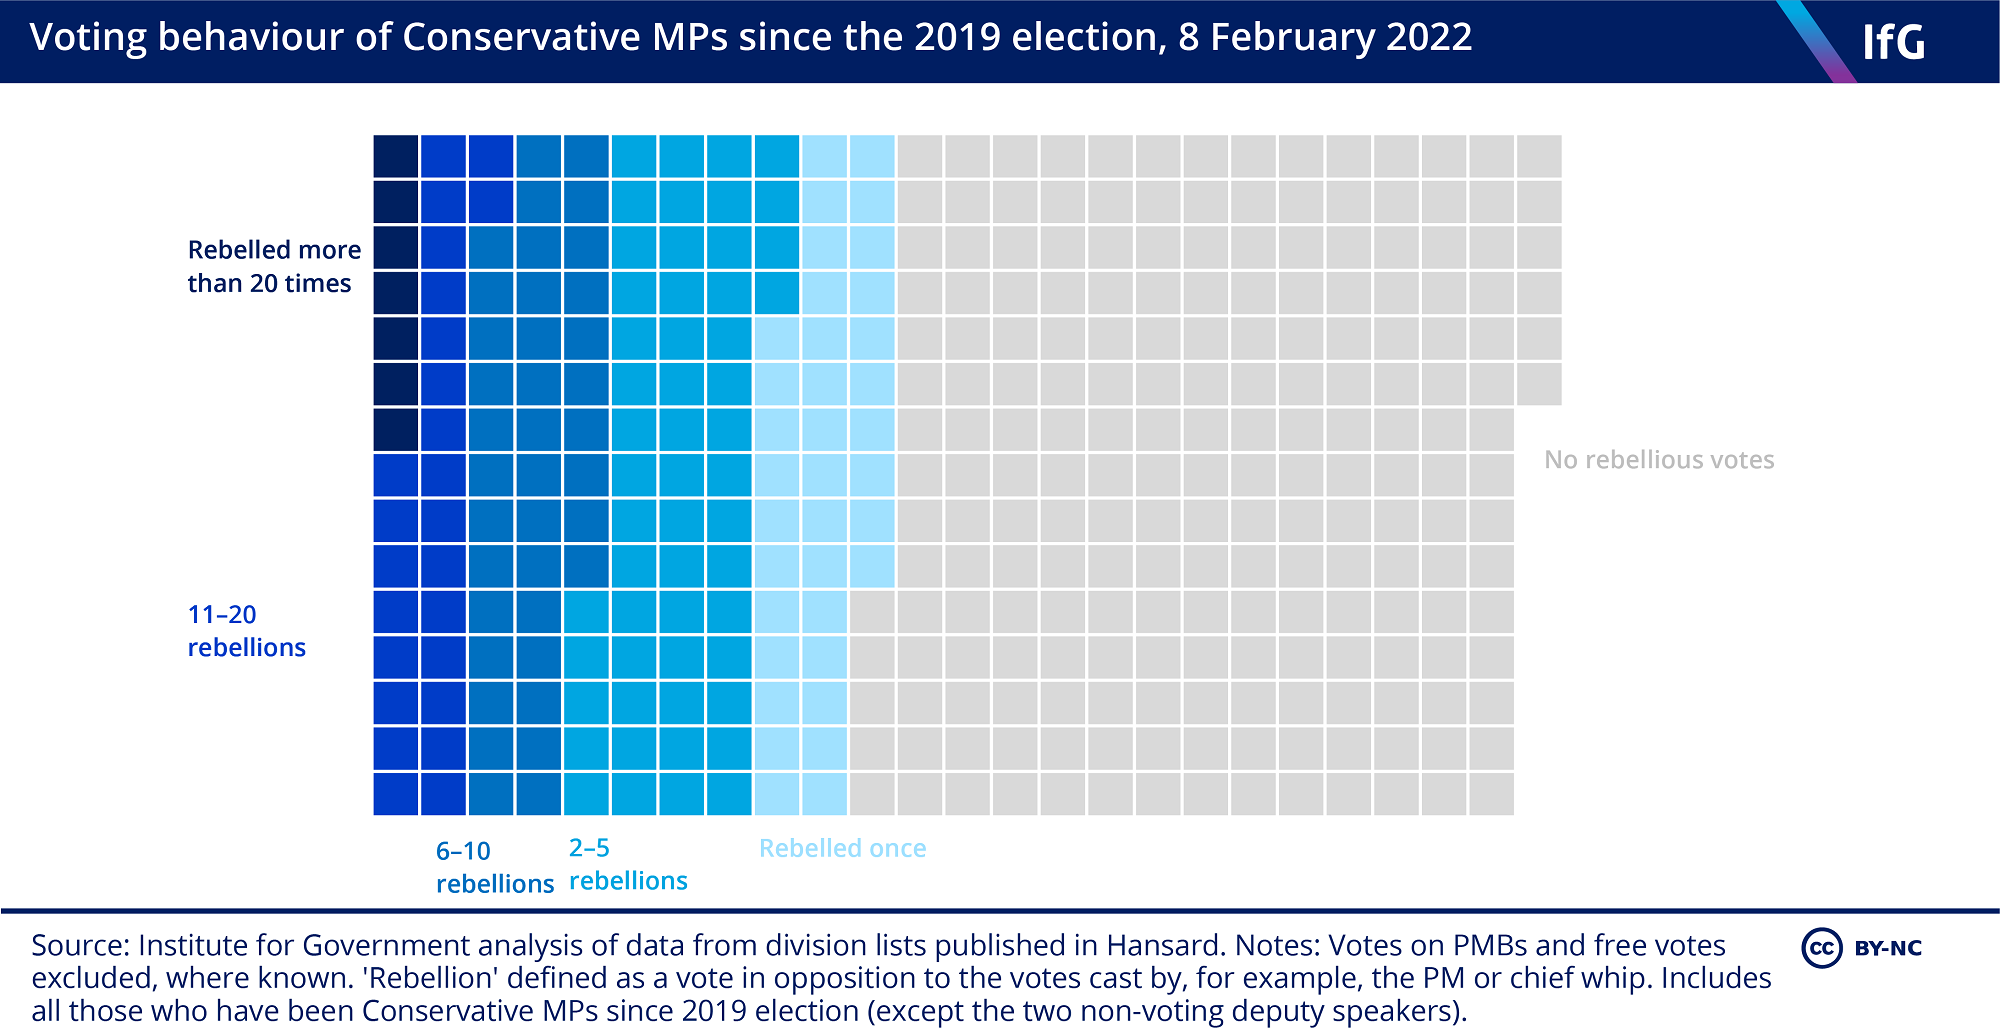 Voting behaviour of Conservative MPs since 2019 election